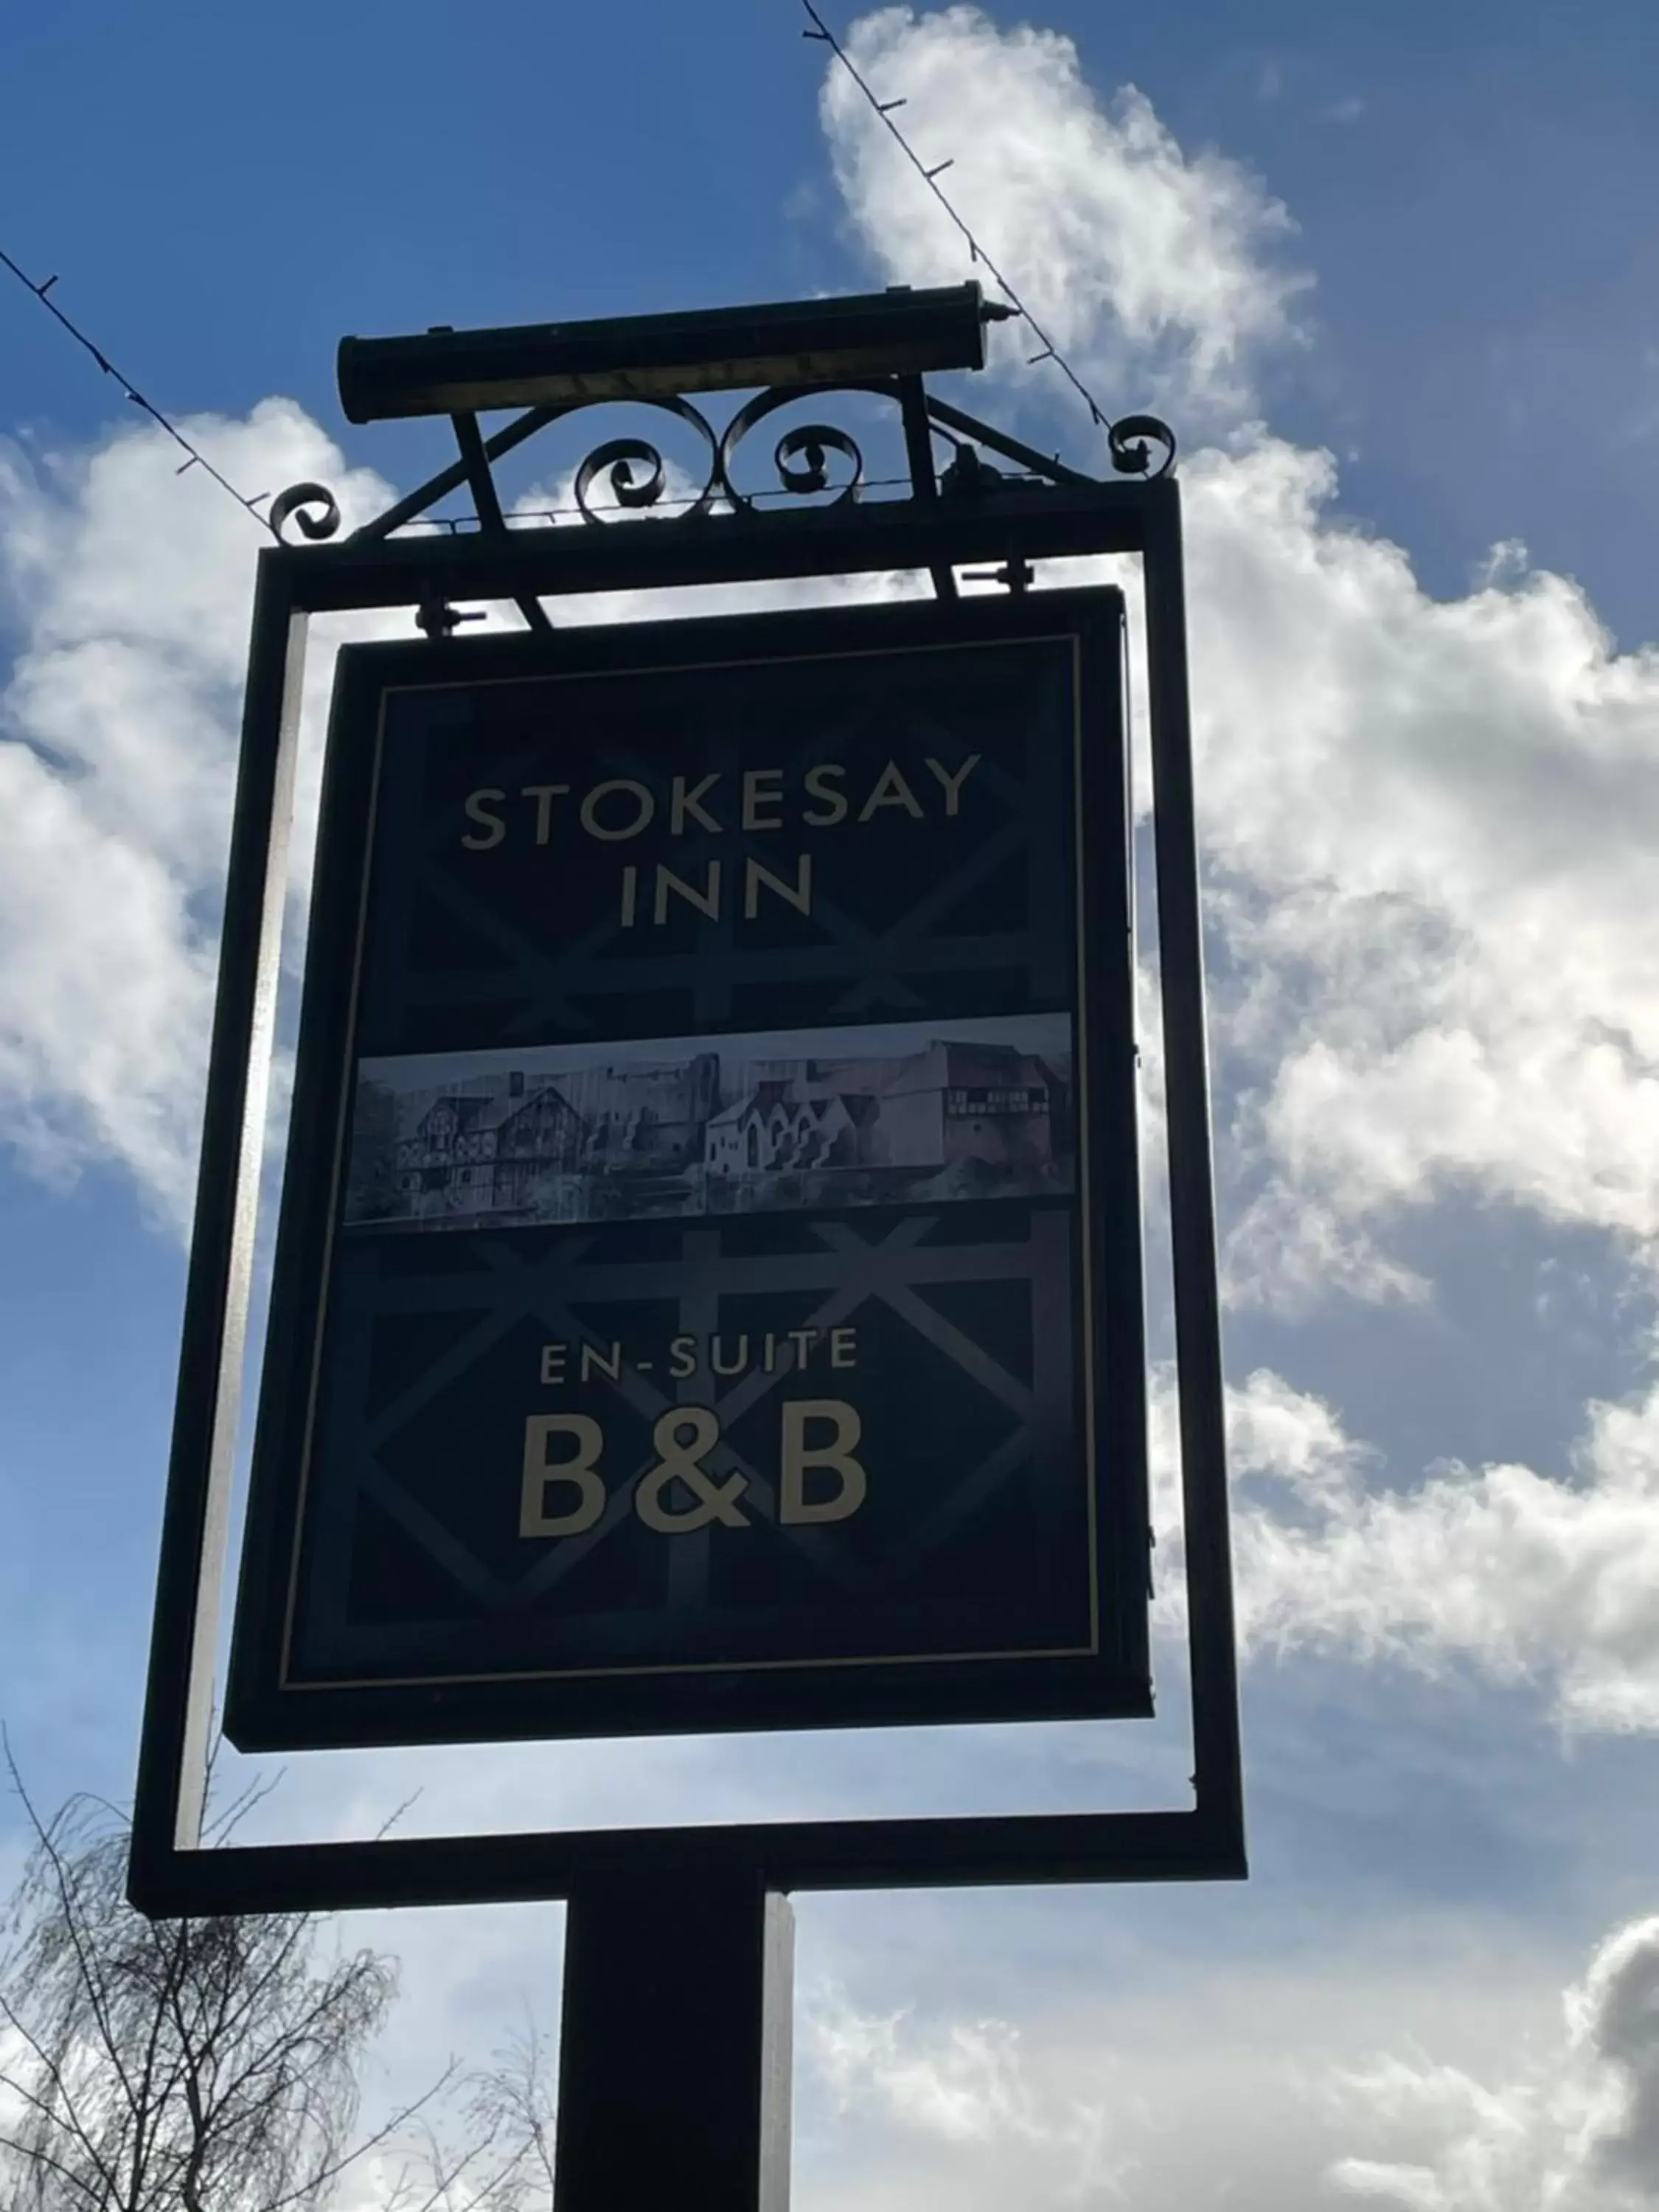 The Stokesay Inn & B&B